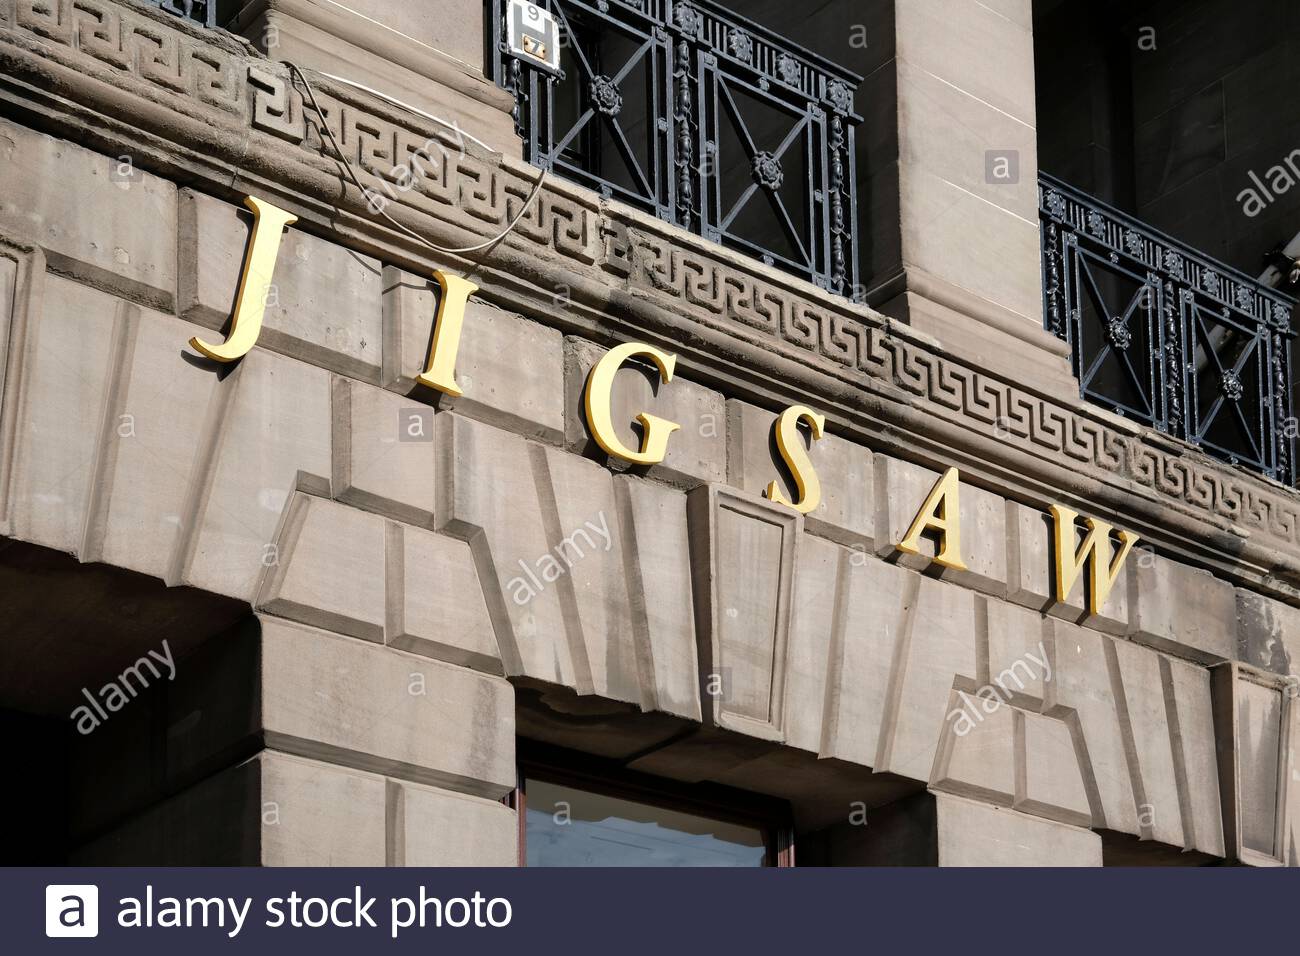 Jigsaw shop sign, retailer of clothing for men, women and children, plus homewares, George Street, Edinburgh Scotland Stock Photo